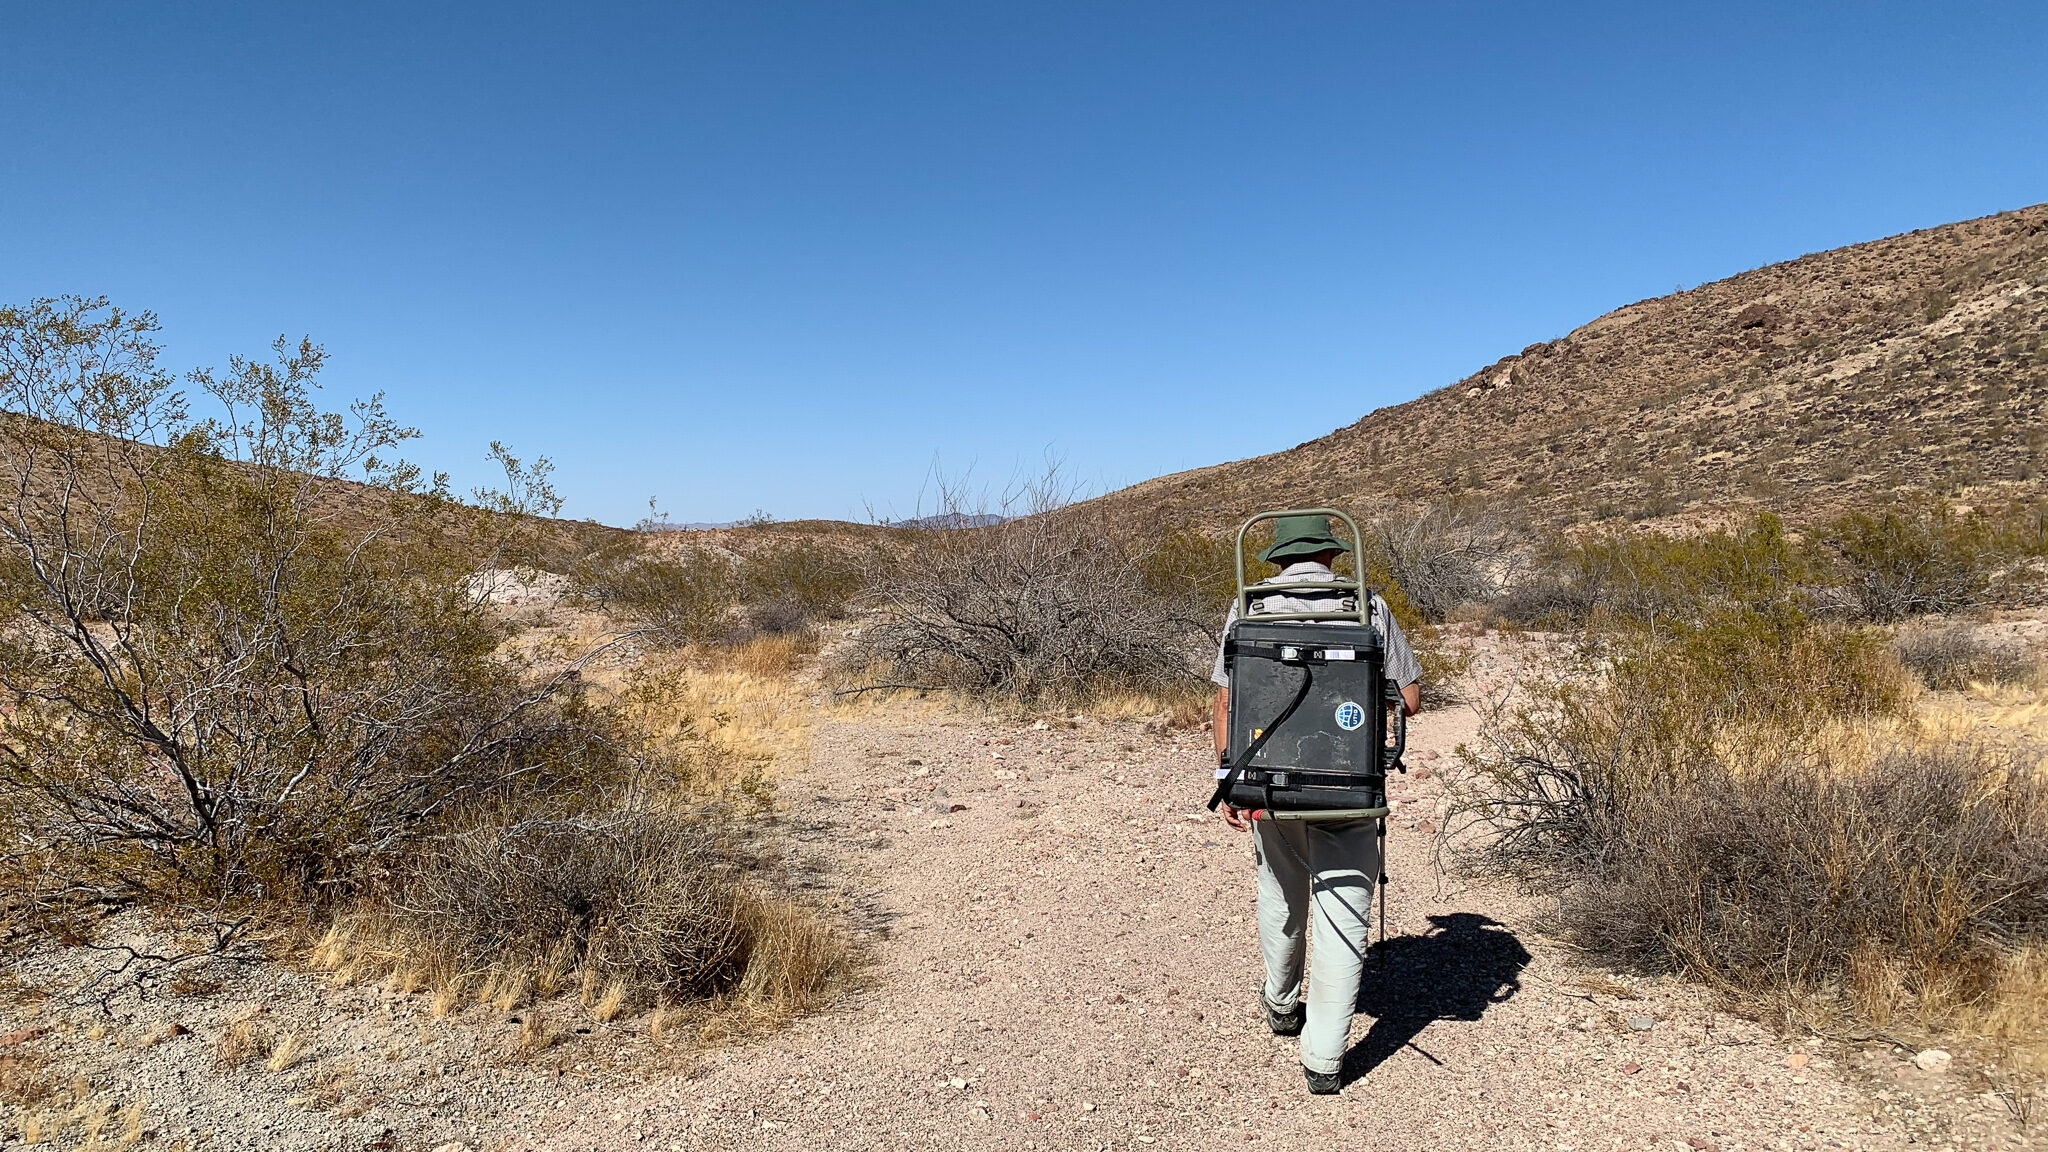 Dan Duncan marching through the desert